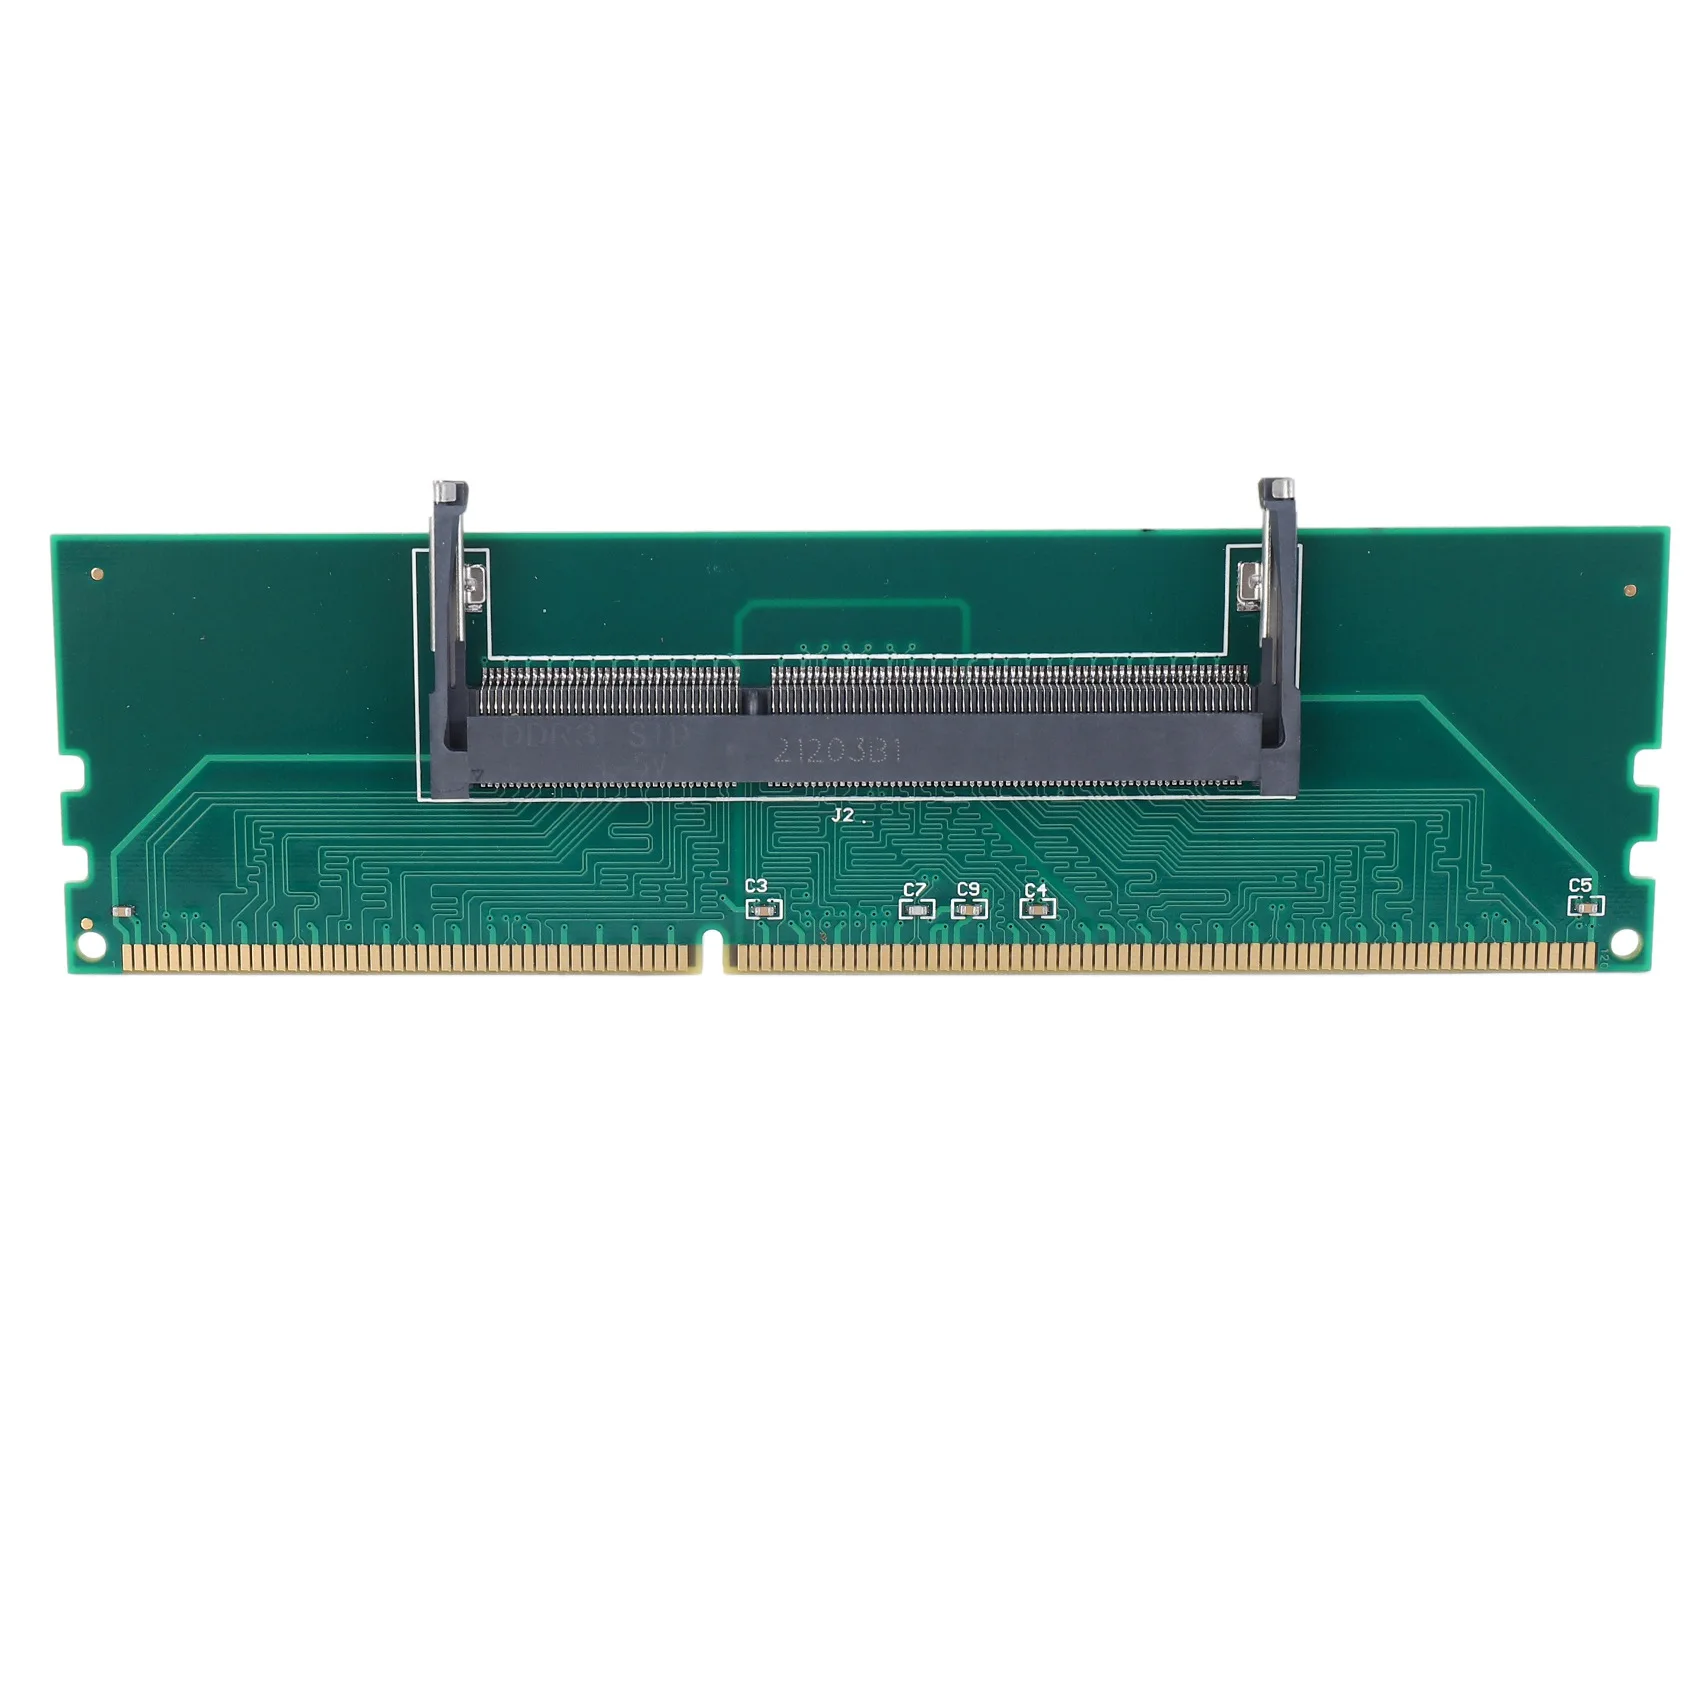 

DDR3 Laptop SO-DIMM to Desktop DIMM Memory RAM Connector Adapter DDR3 New adapter of laptop Internal Memory to Desktop RAM